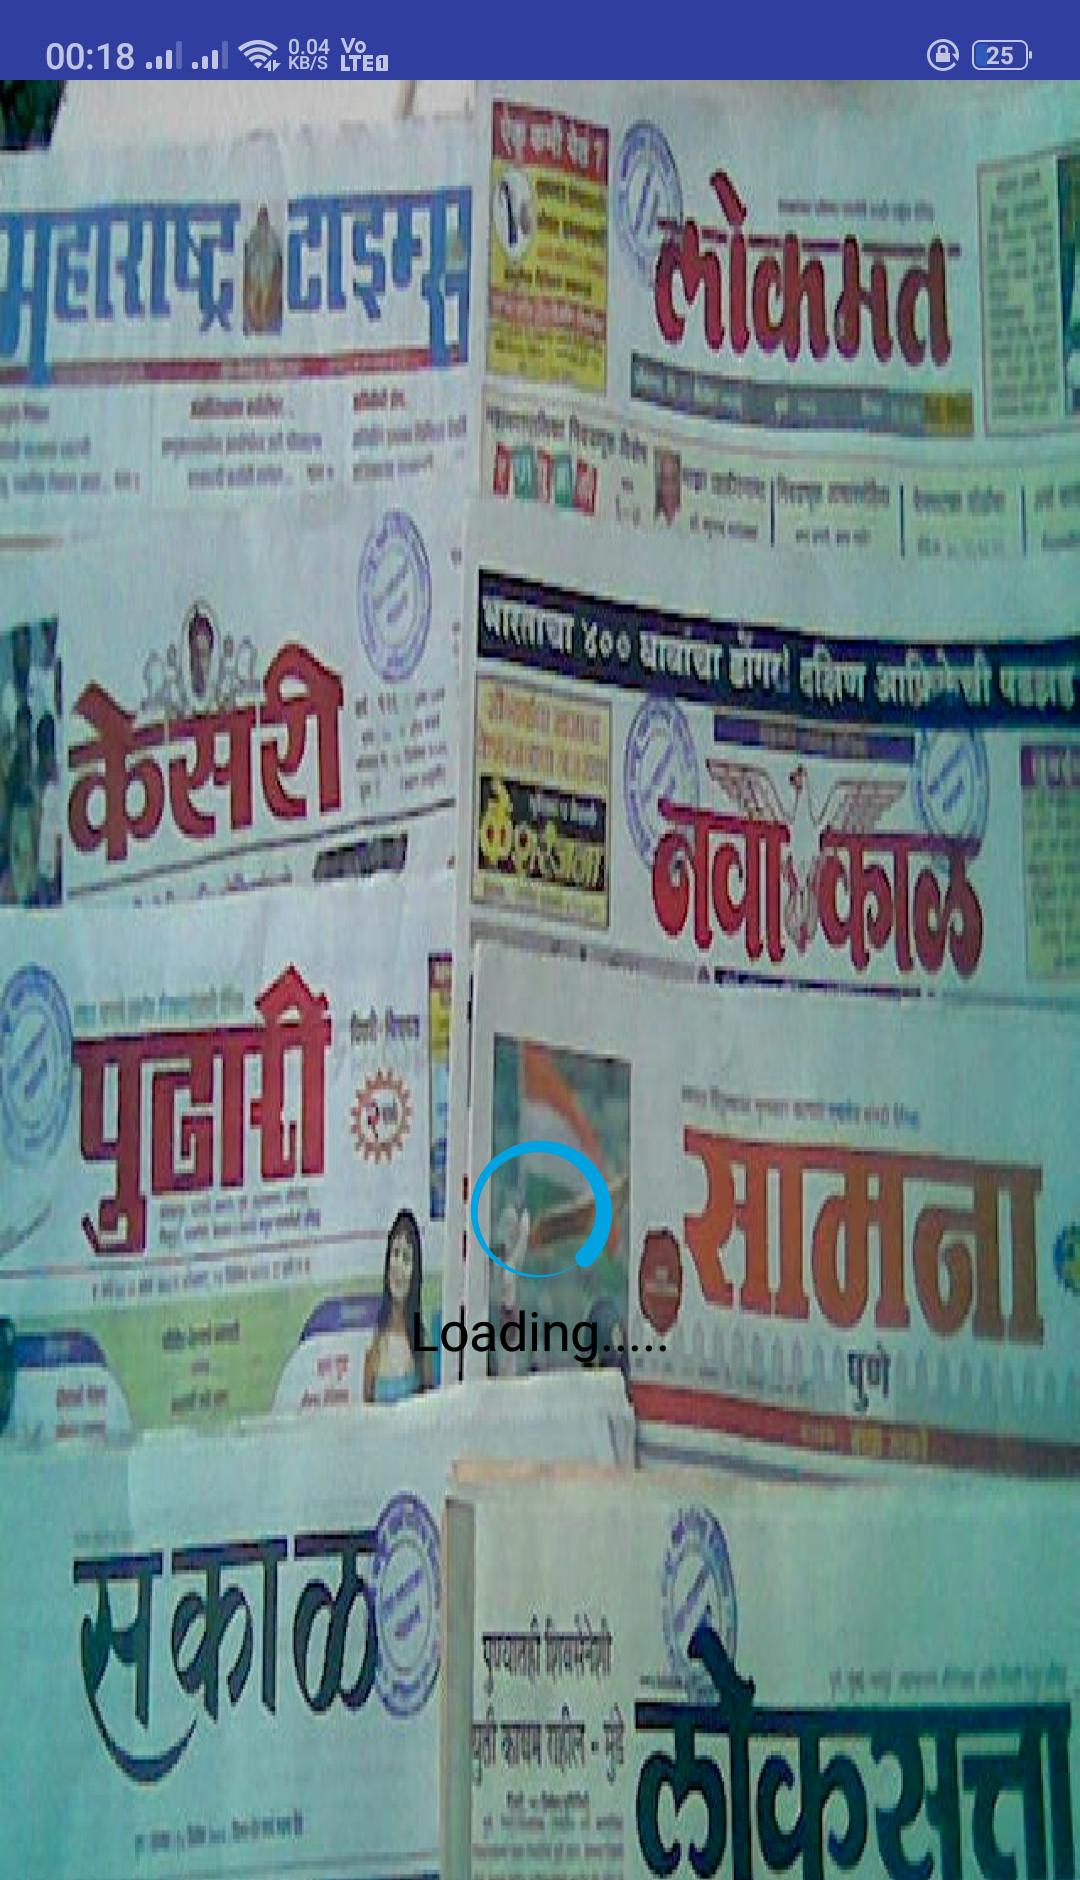 Marathi News - All Daily Marathi Newspaper Epapers